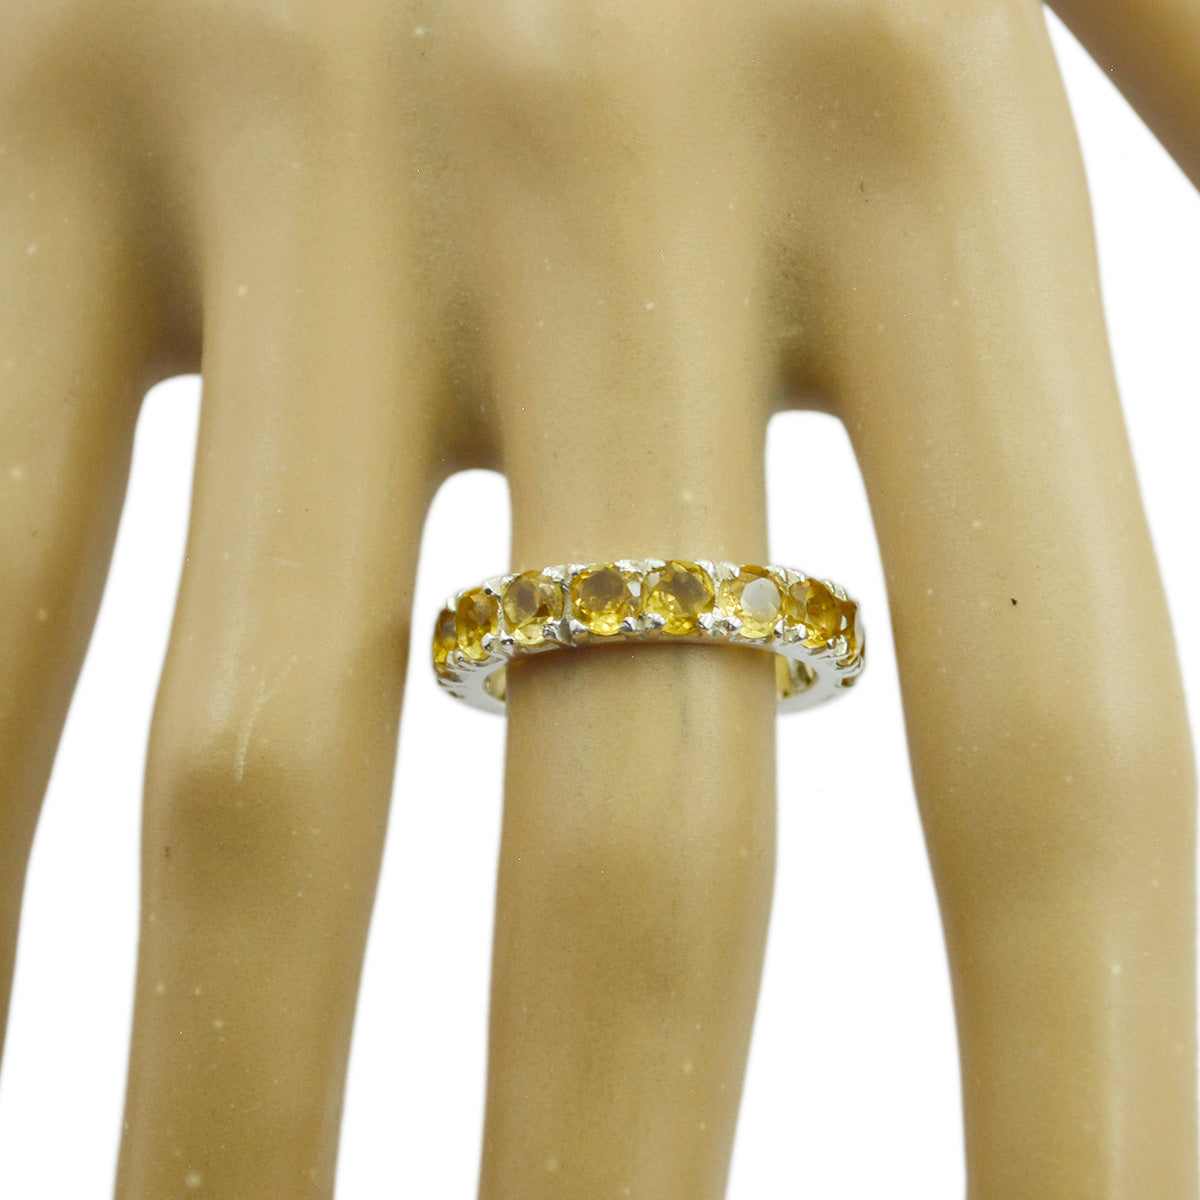 Riyo Natural Gemstones Citrine Sterling Silver Ring Texas Jewelry